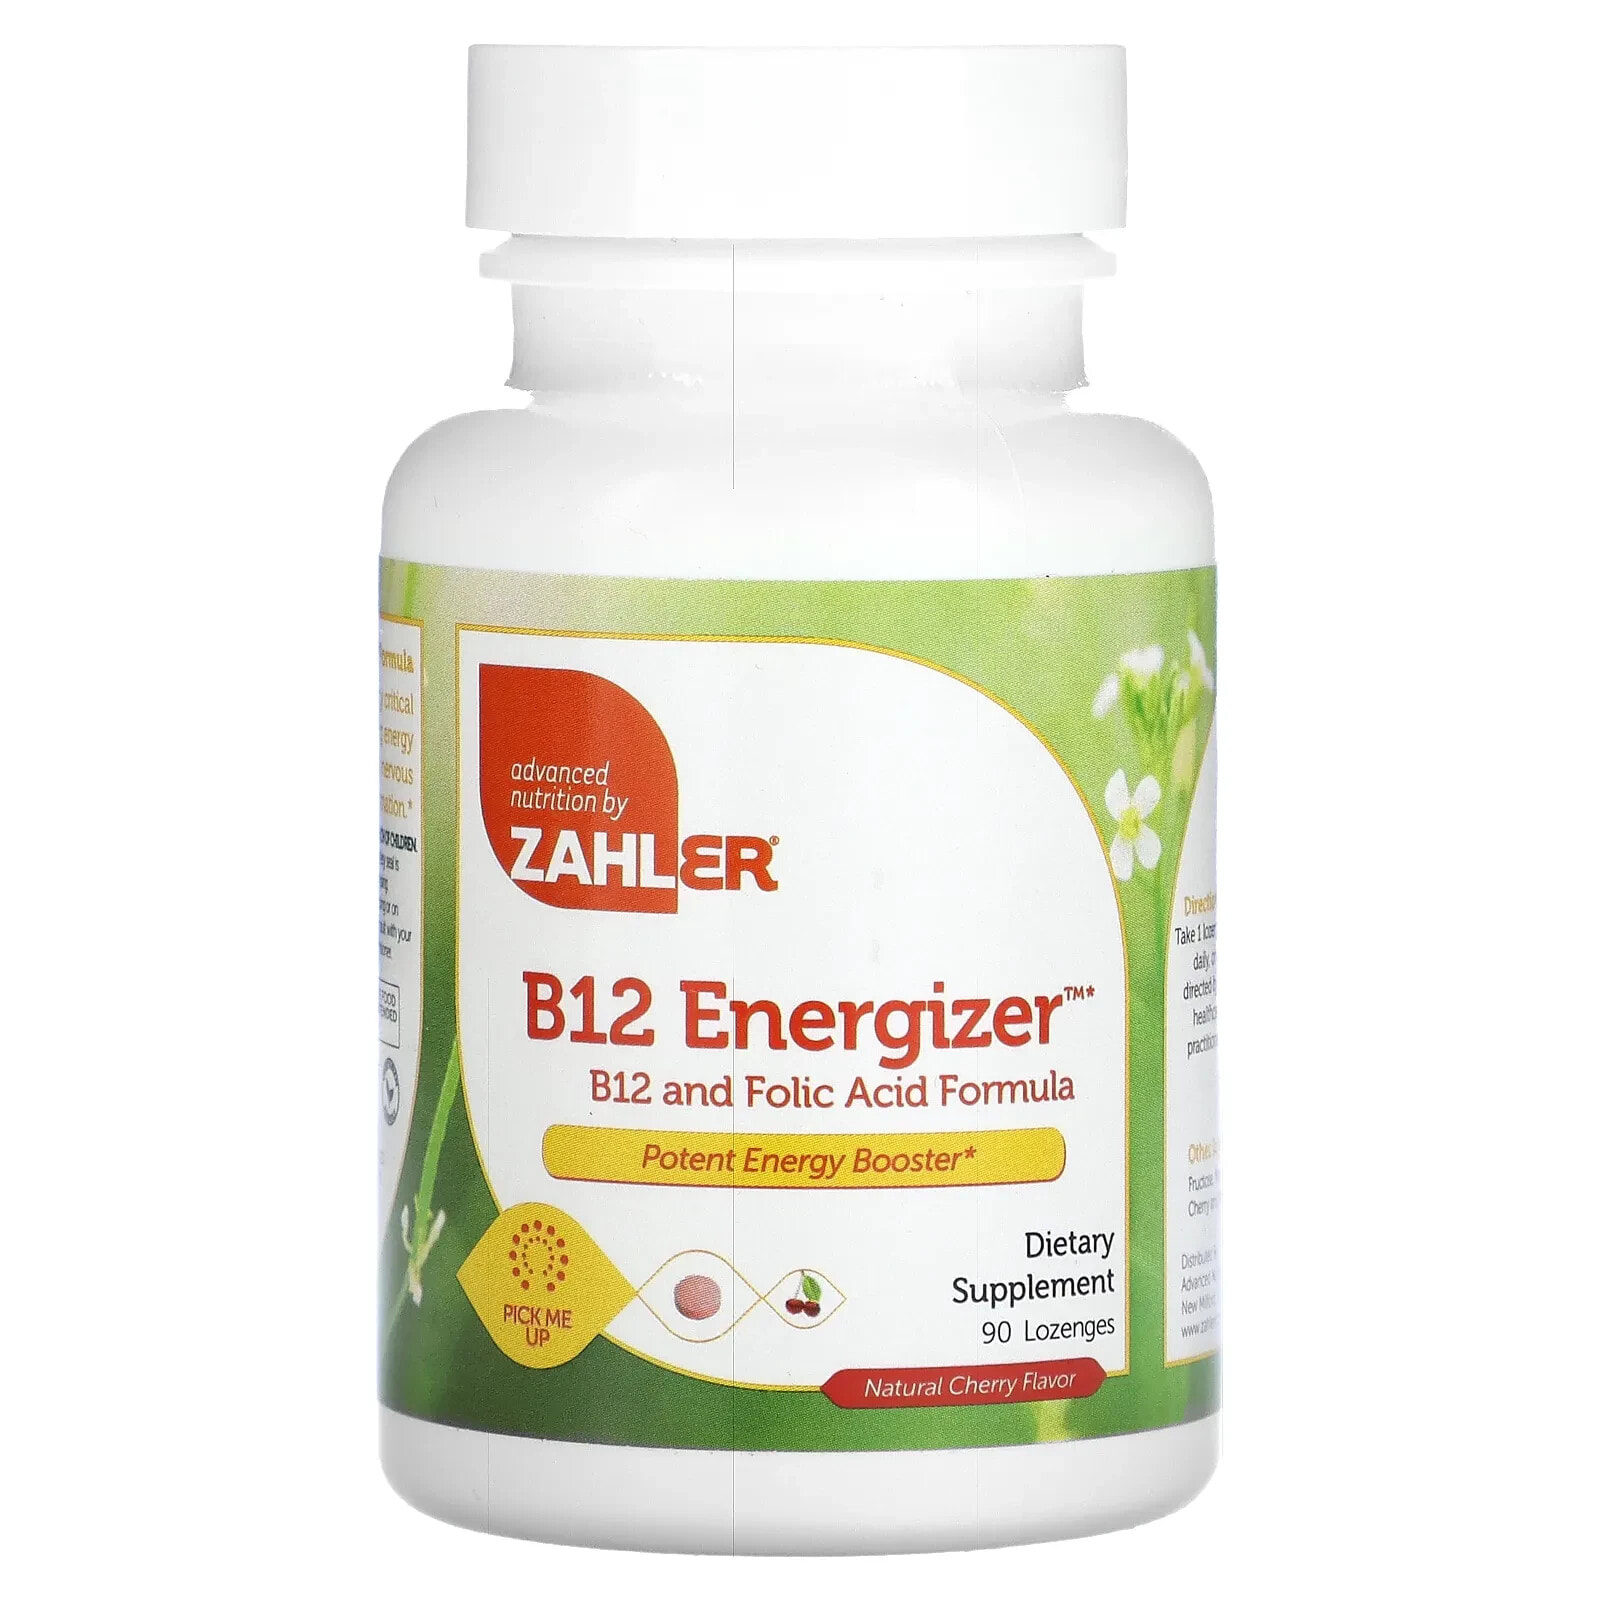 Zahler, B12 Energizer+, Advanced B12 Formula, Natural Cherry, 5,000 mcg, 120 Lozenges